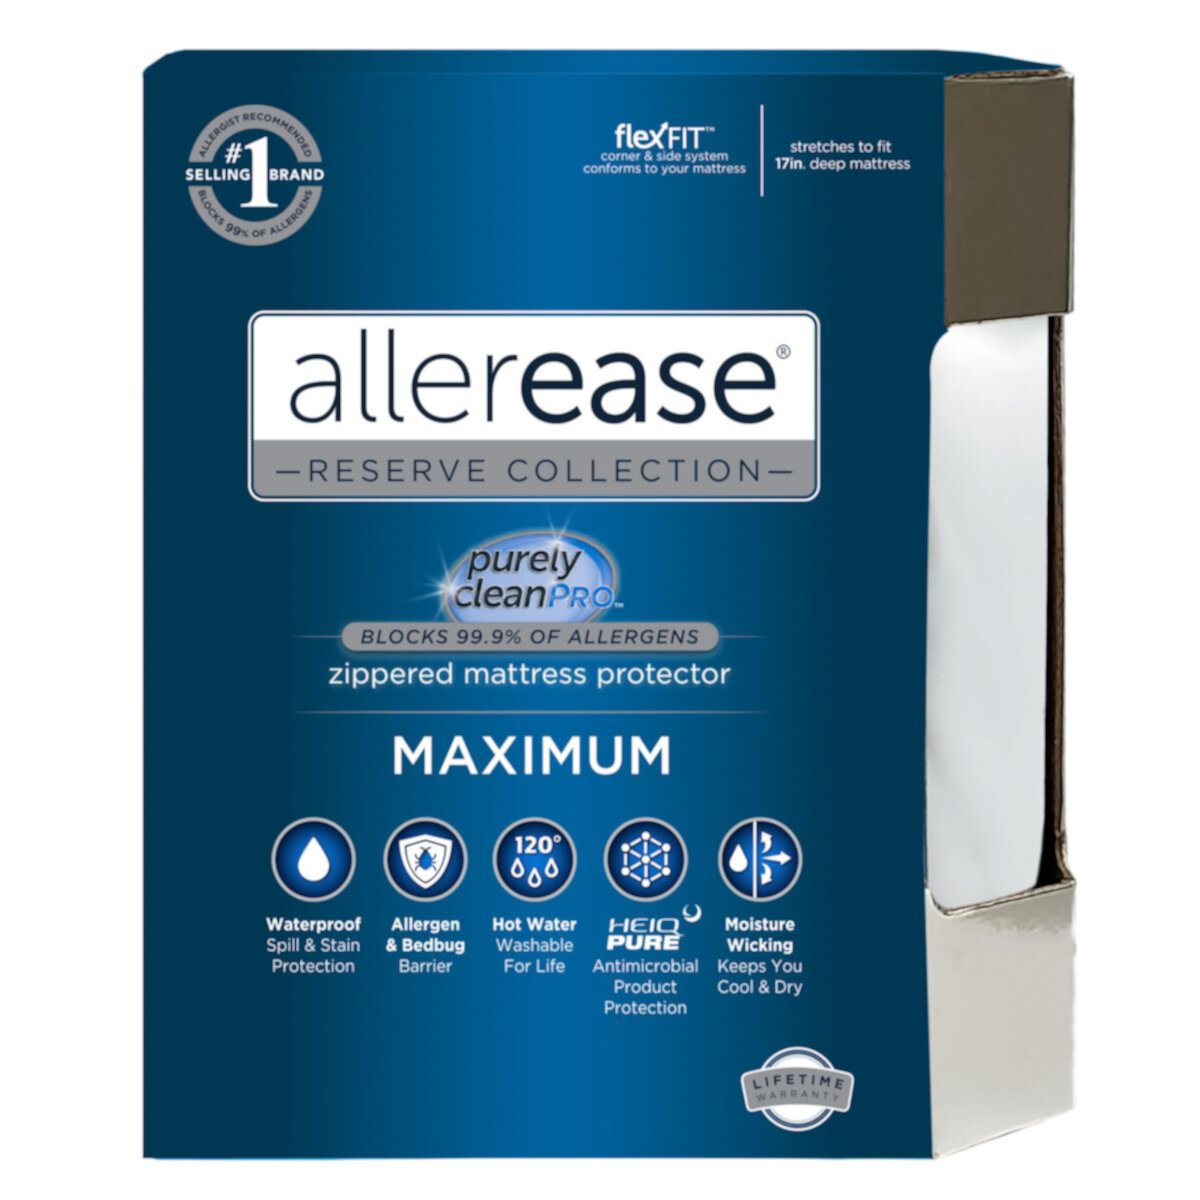 Allerease Maximum Bedbug & Allergy Protection Mattress Protector AllerEase